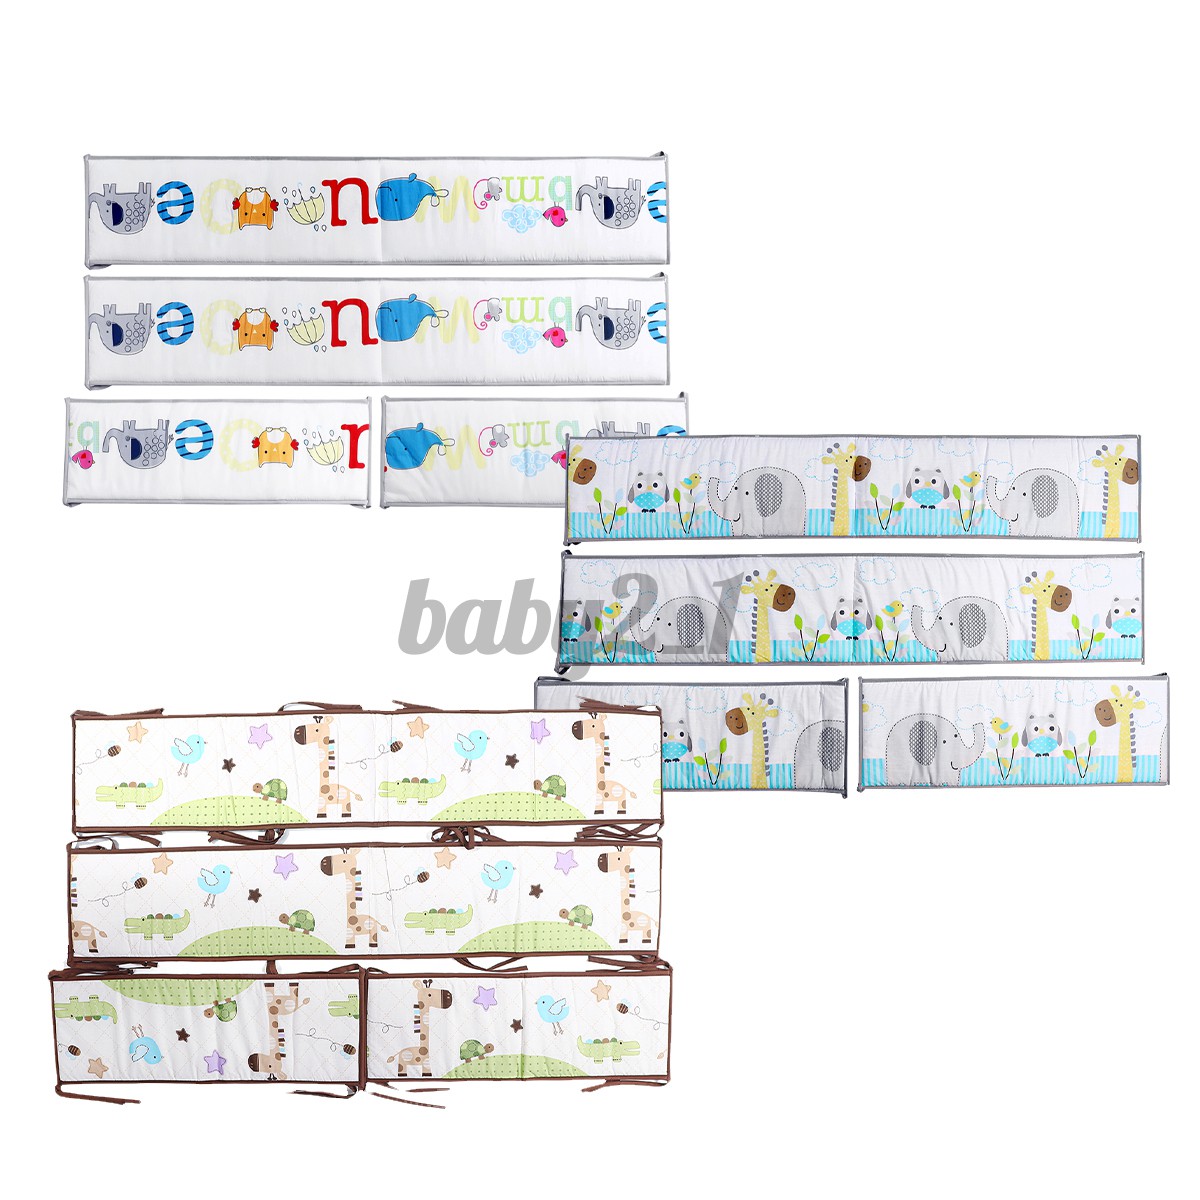 4Pcs//set Animal Baby Infant Cot Crib Bumper Toddler Nursery Safety Protector